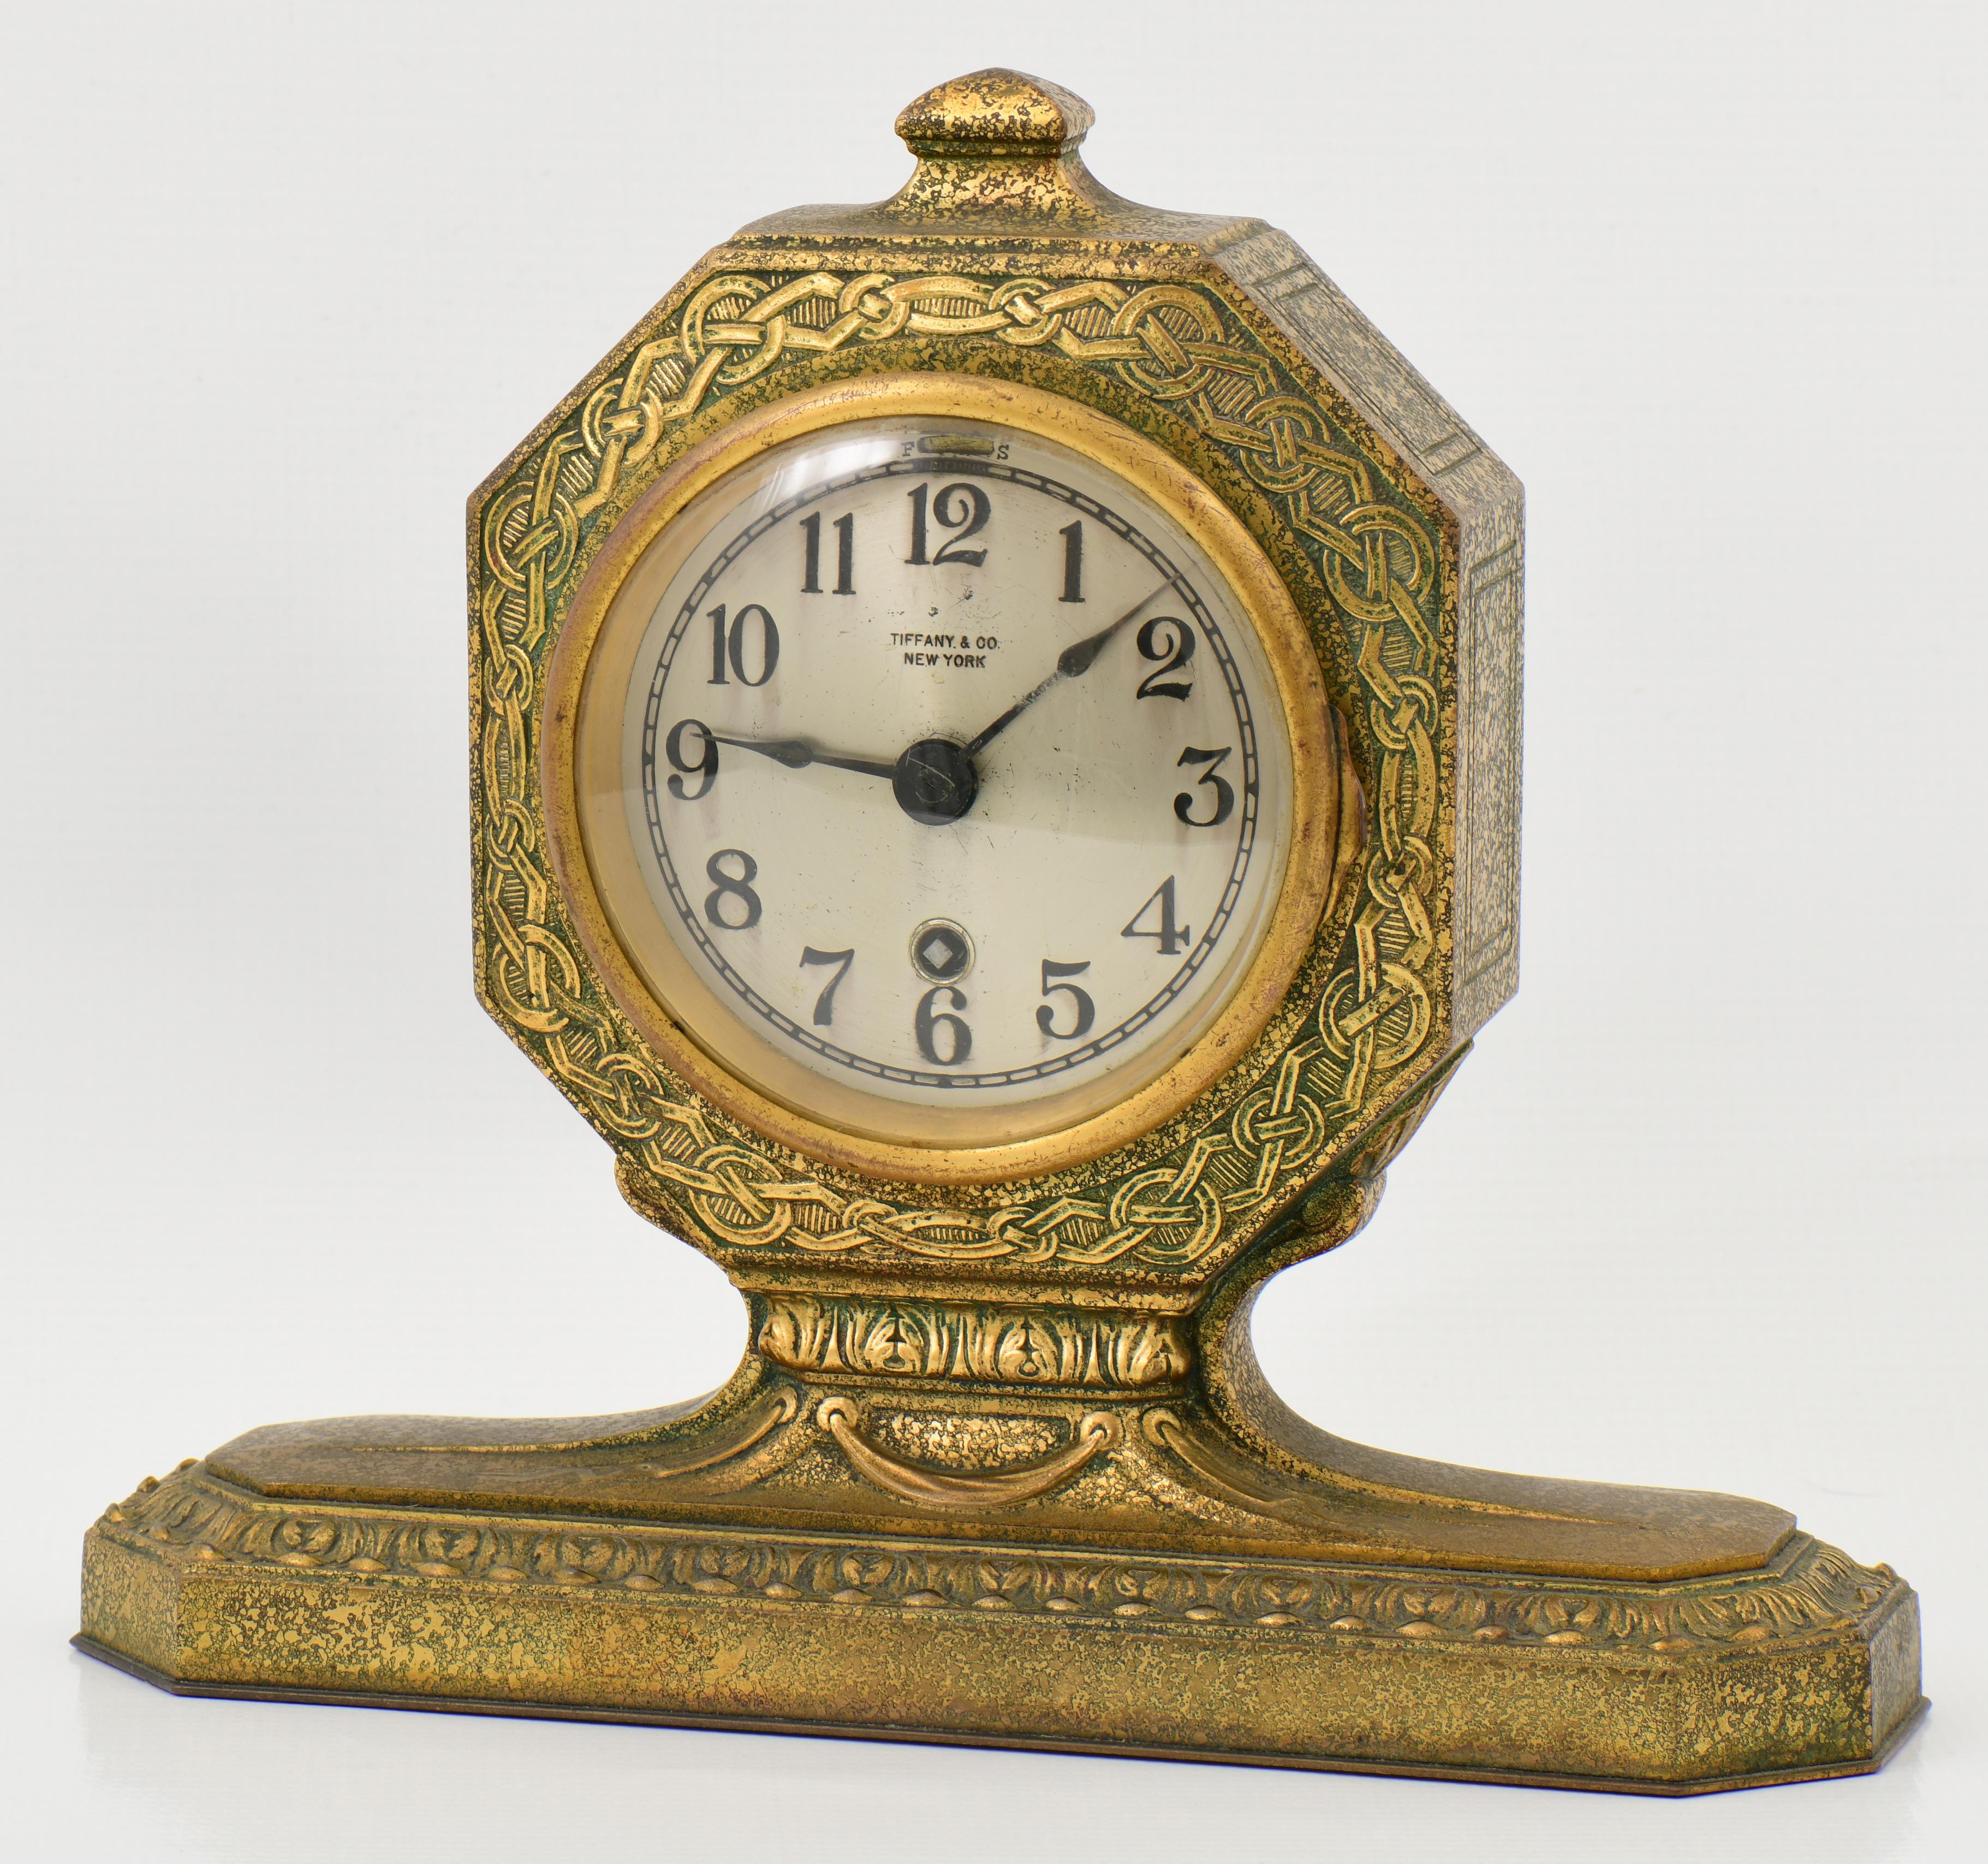 Makers: Tiffany Studios, Chelsea Clock Co.
Retailer: Tiffany & Co.
Type: Mantel Clock
Circa: 1905
Materials: gilt bronze, glass, silvered metal
Clock face marked: 